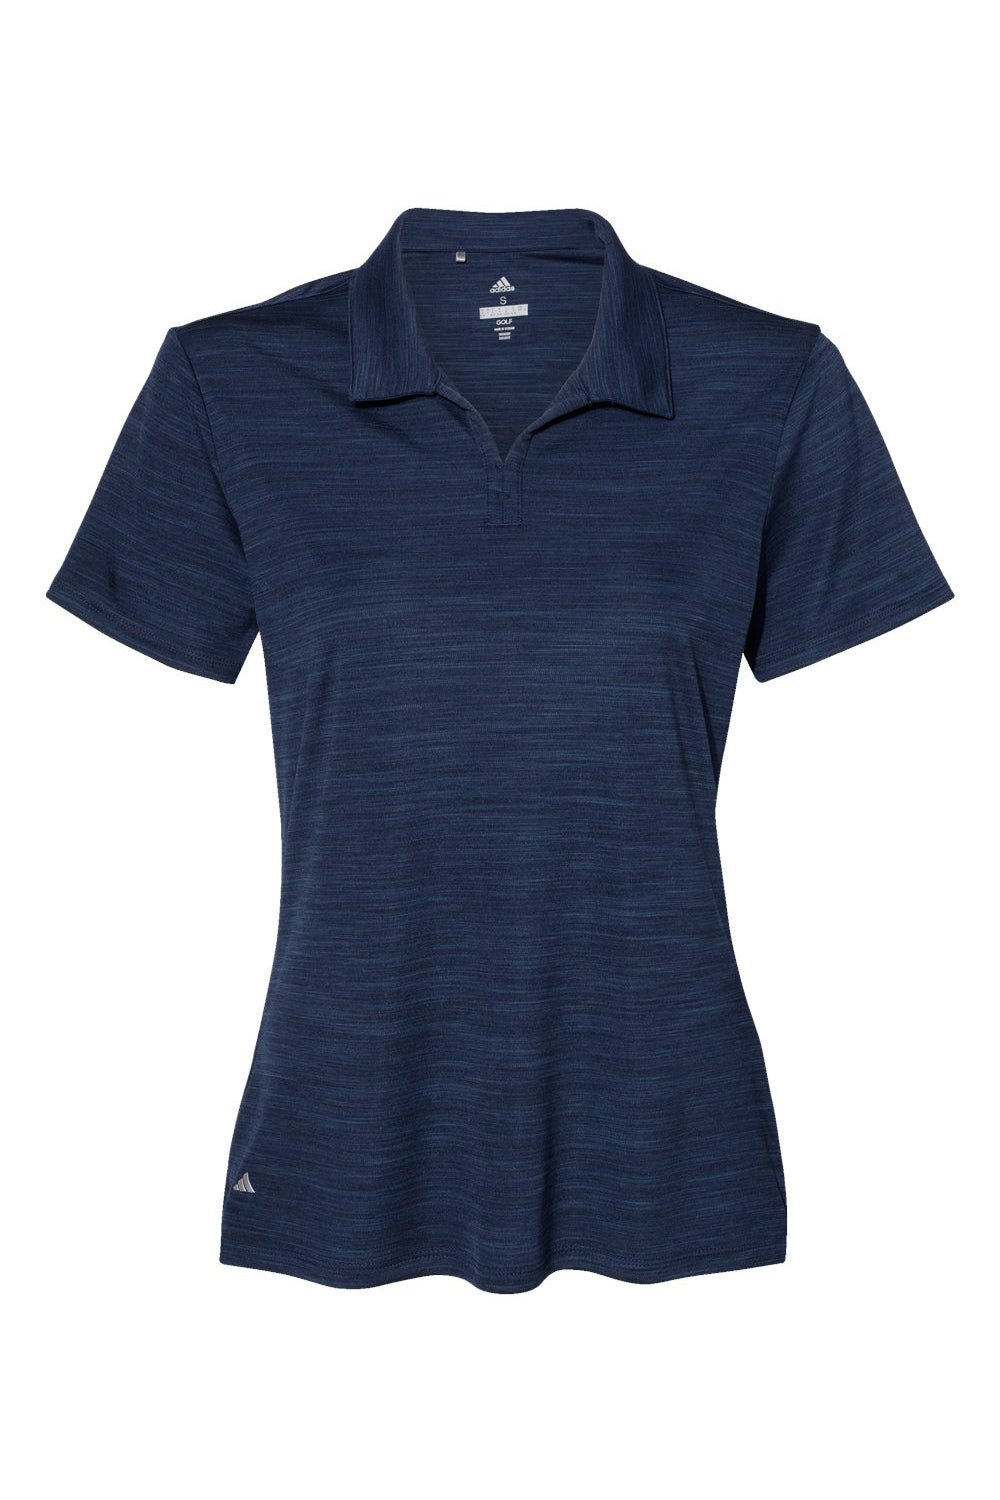 Adidas A403 Womens UPF 50+ Short Sleeve Polo Shirt Collegiate Navy Blue Melange Flat Front